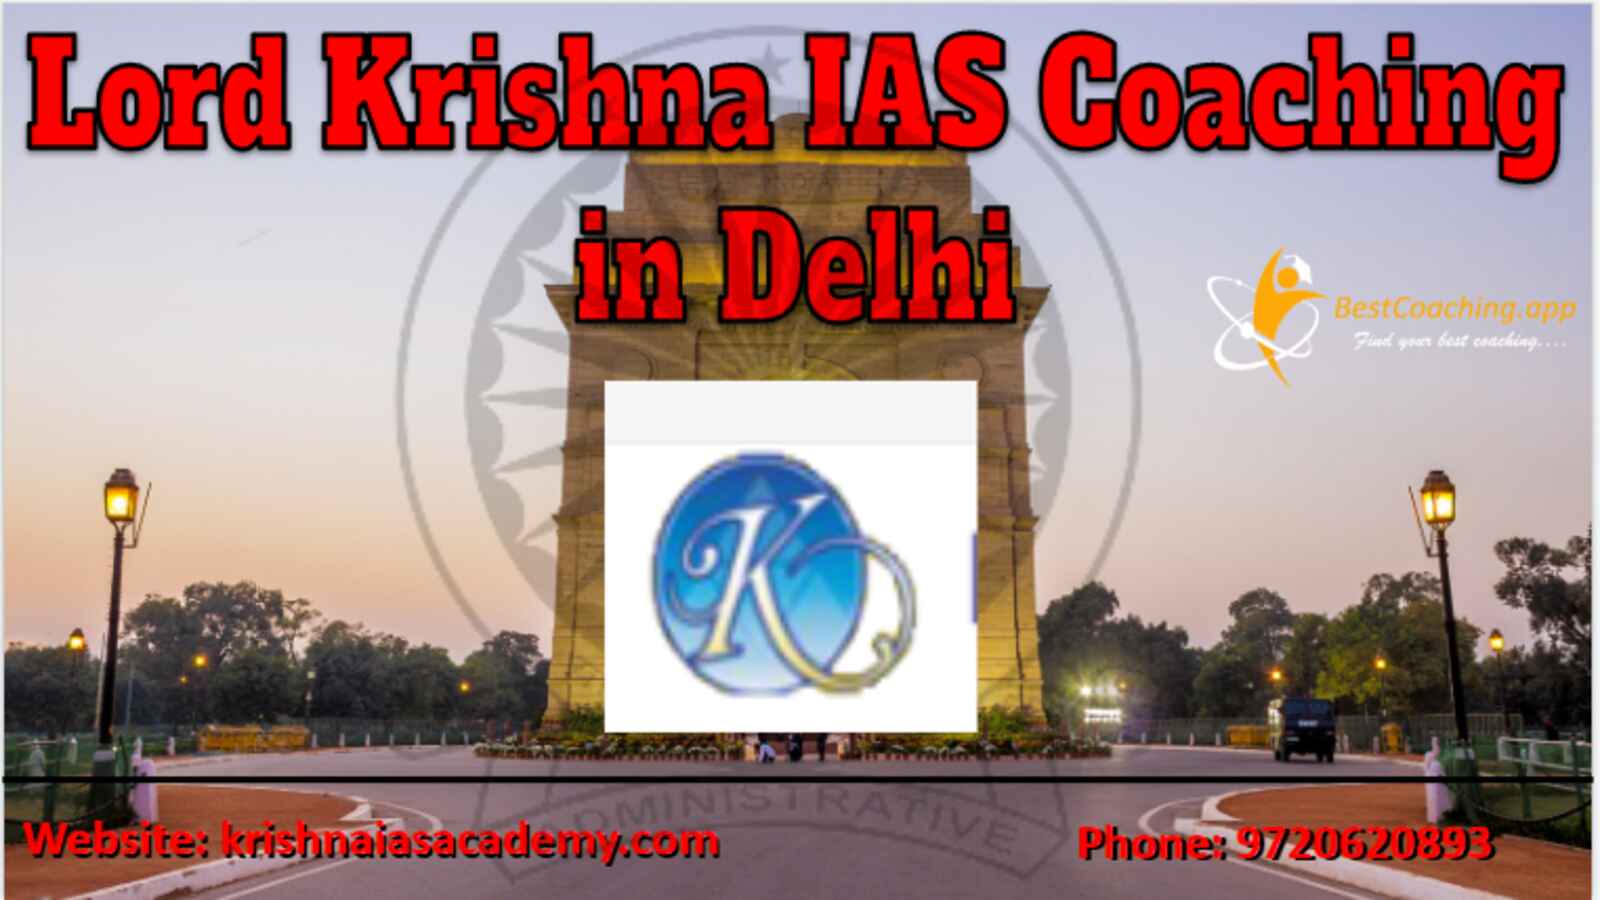 Lord Krishna IAS Coaching Delhi